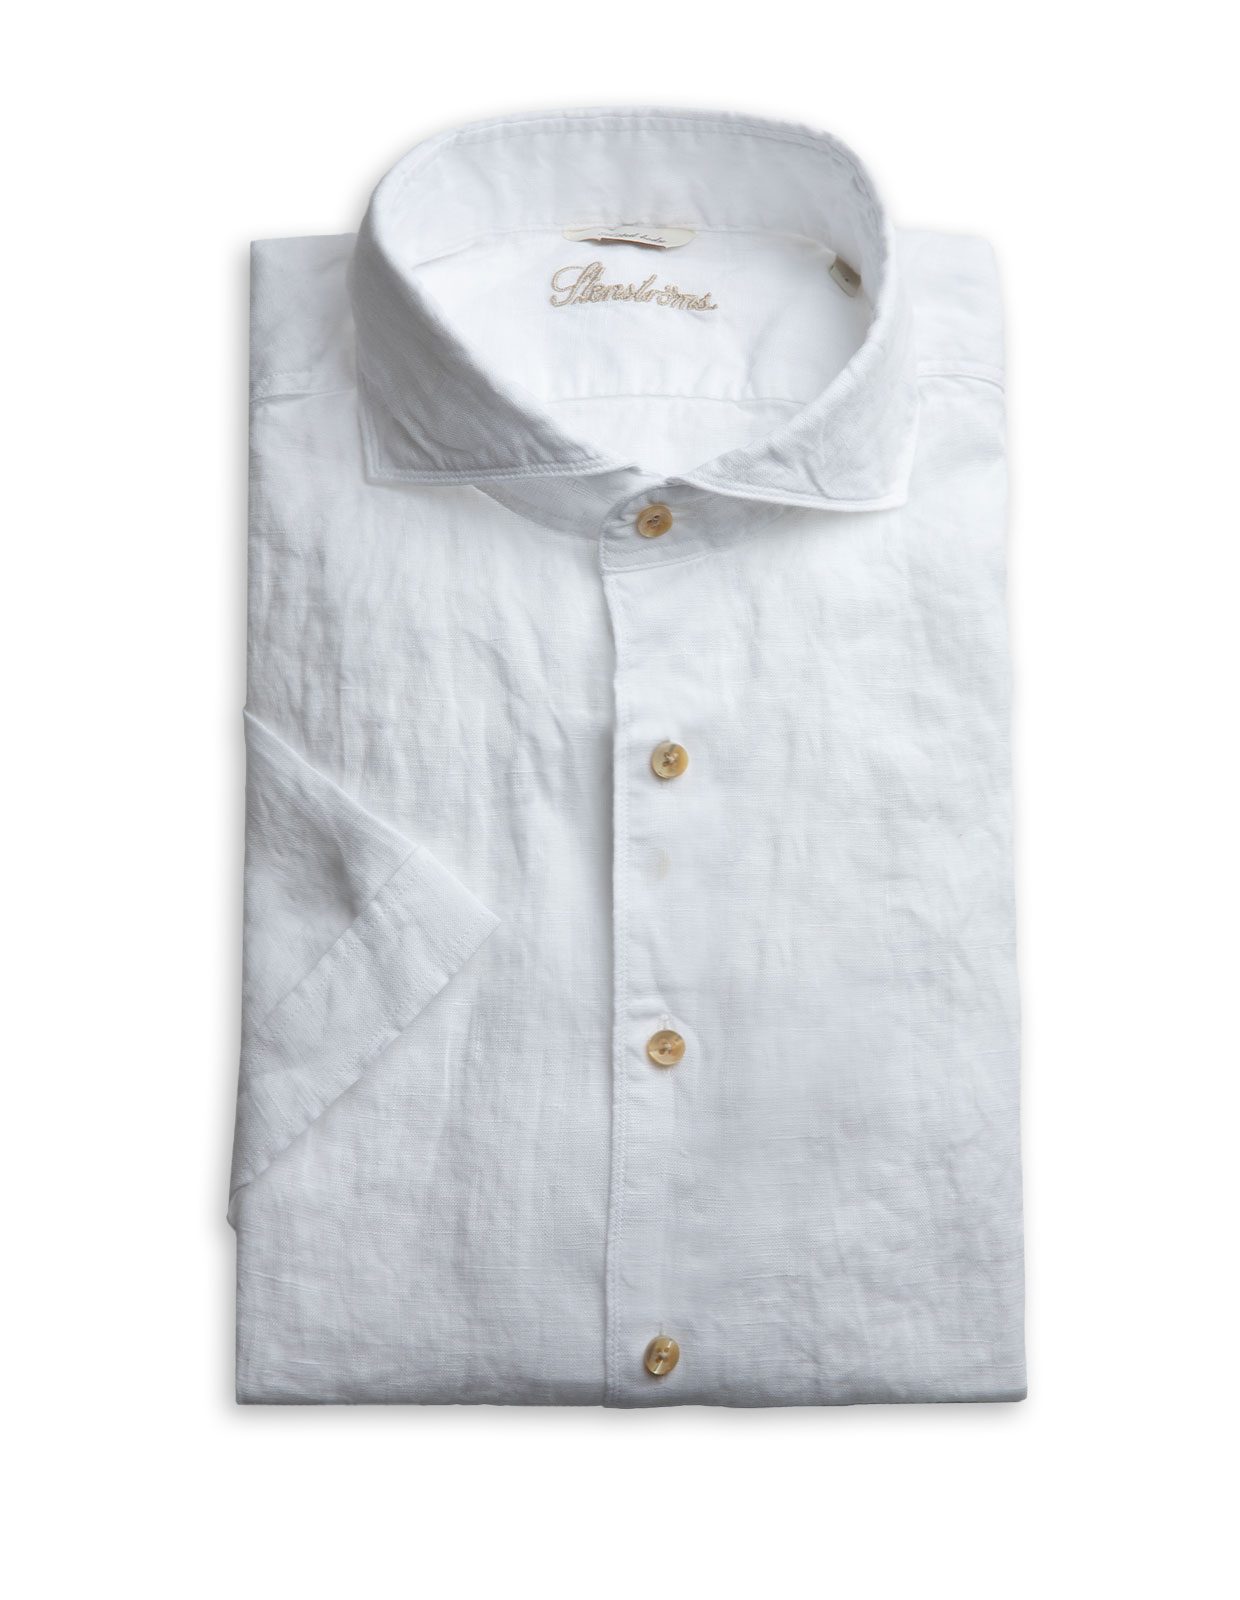 Fitted Body Short Sleeves Linen Shirt White